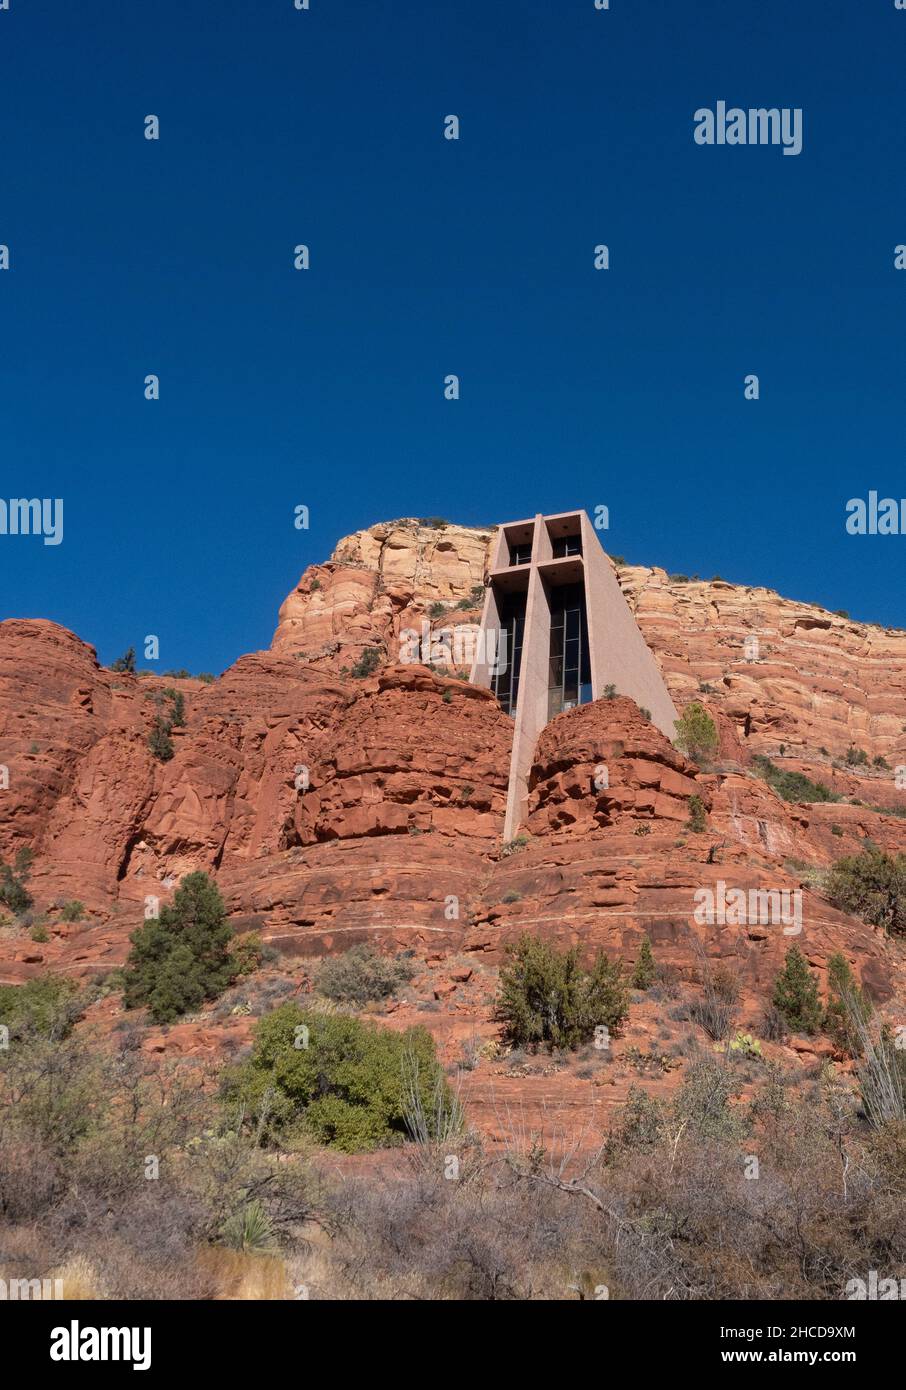 Roman Catholic Chapel of the Holy Cross built into an orange sandstone cliff in Sedona, Arizona, with brilliant turquoise sky above. Stock Photo